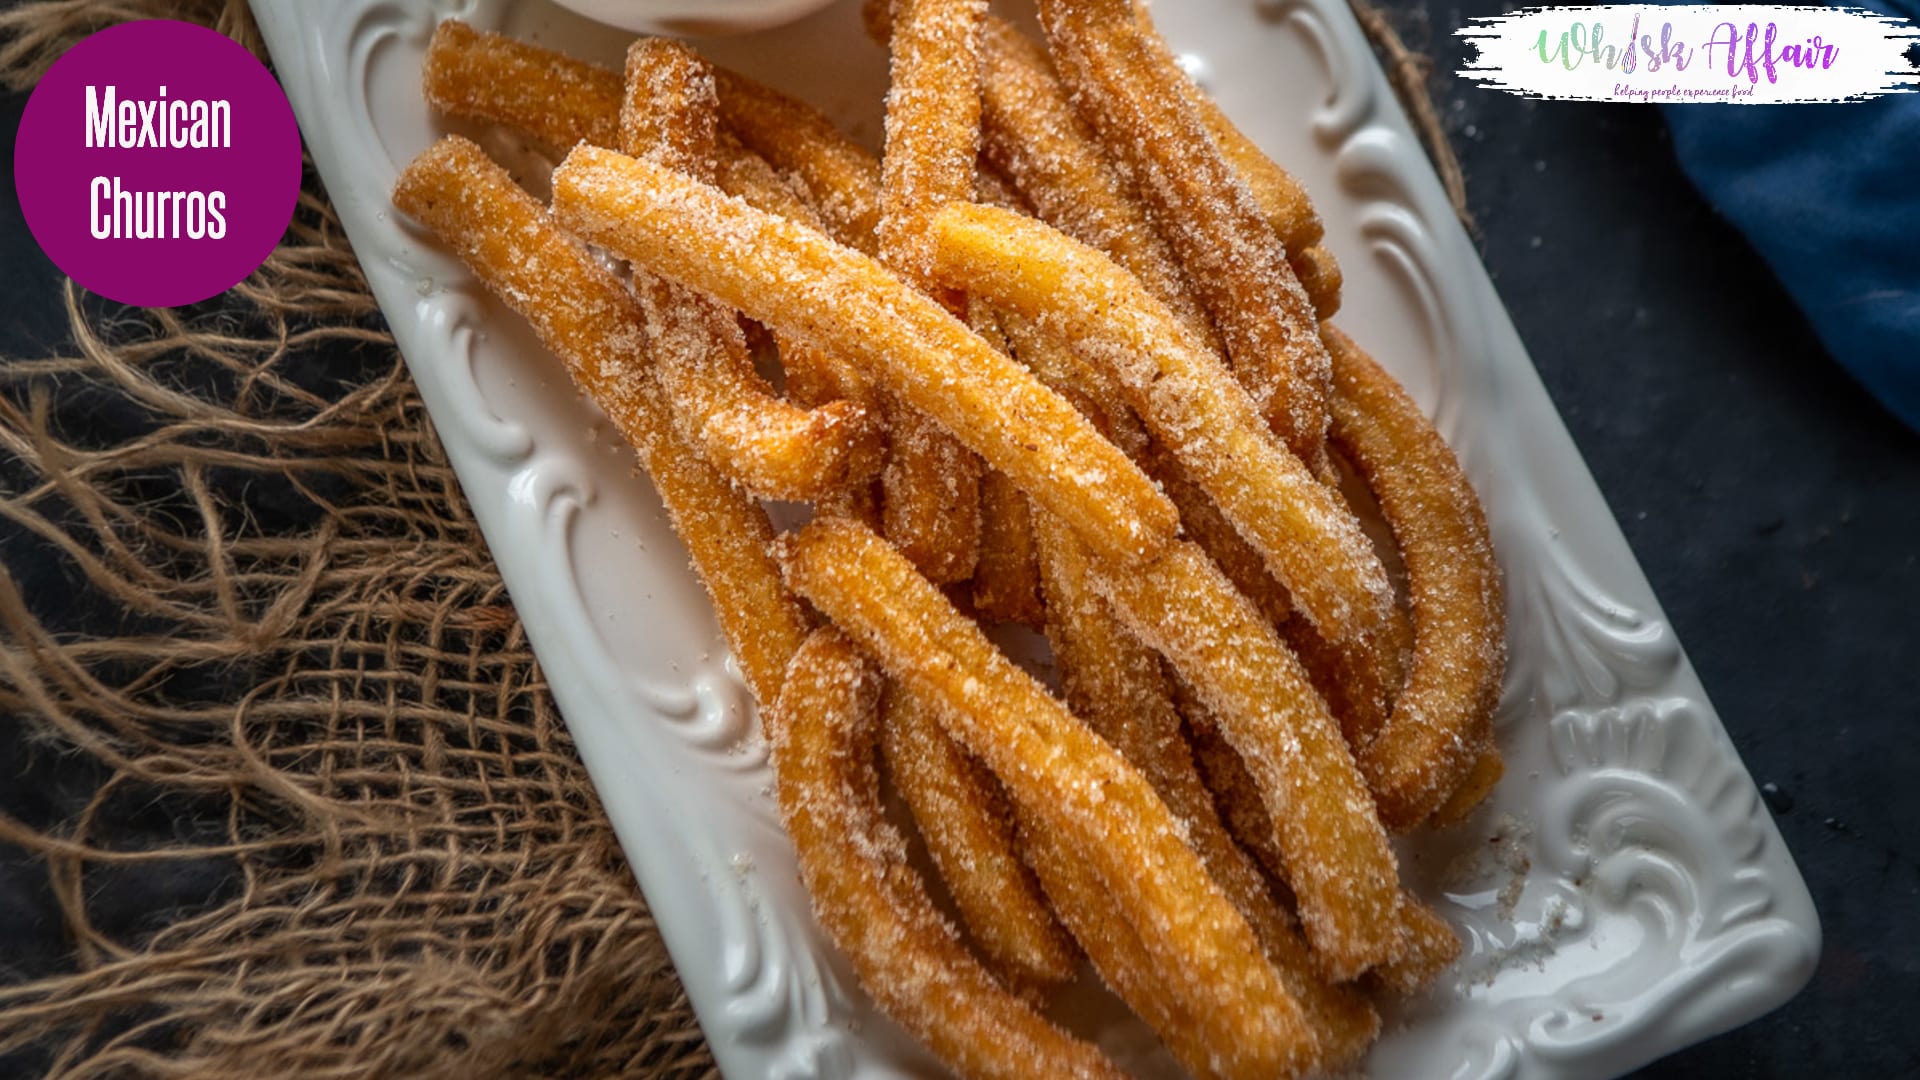 Cinnamon-Sugar Churros Recipe - Gluten-Free and Regular options!